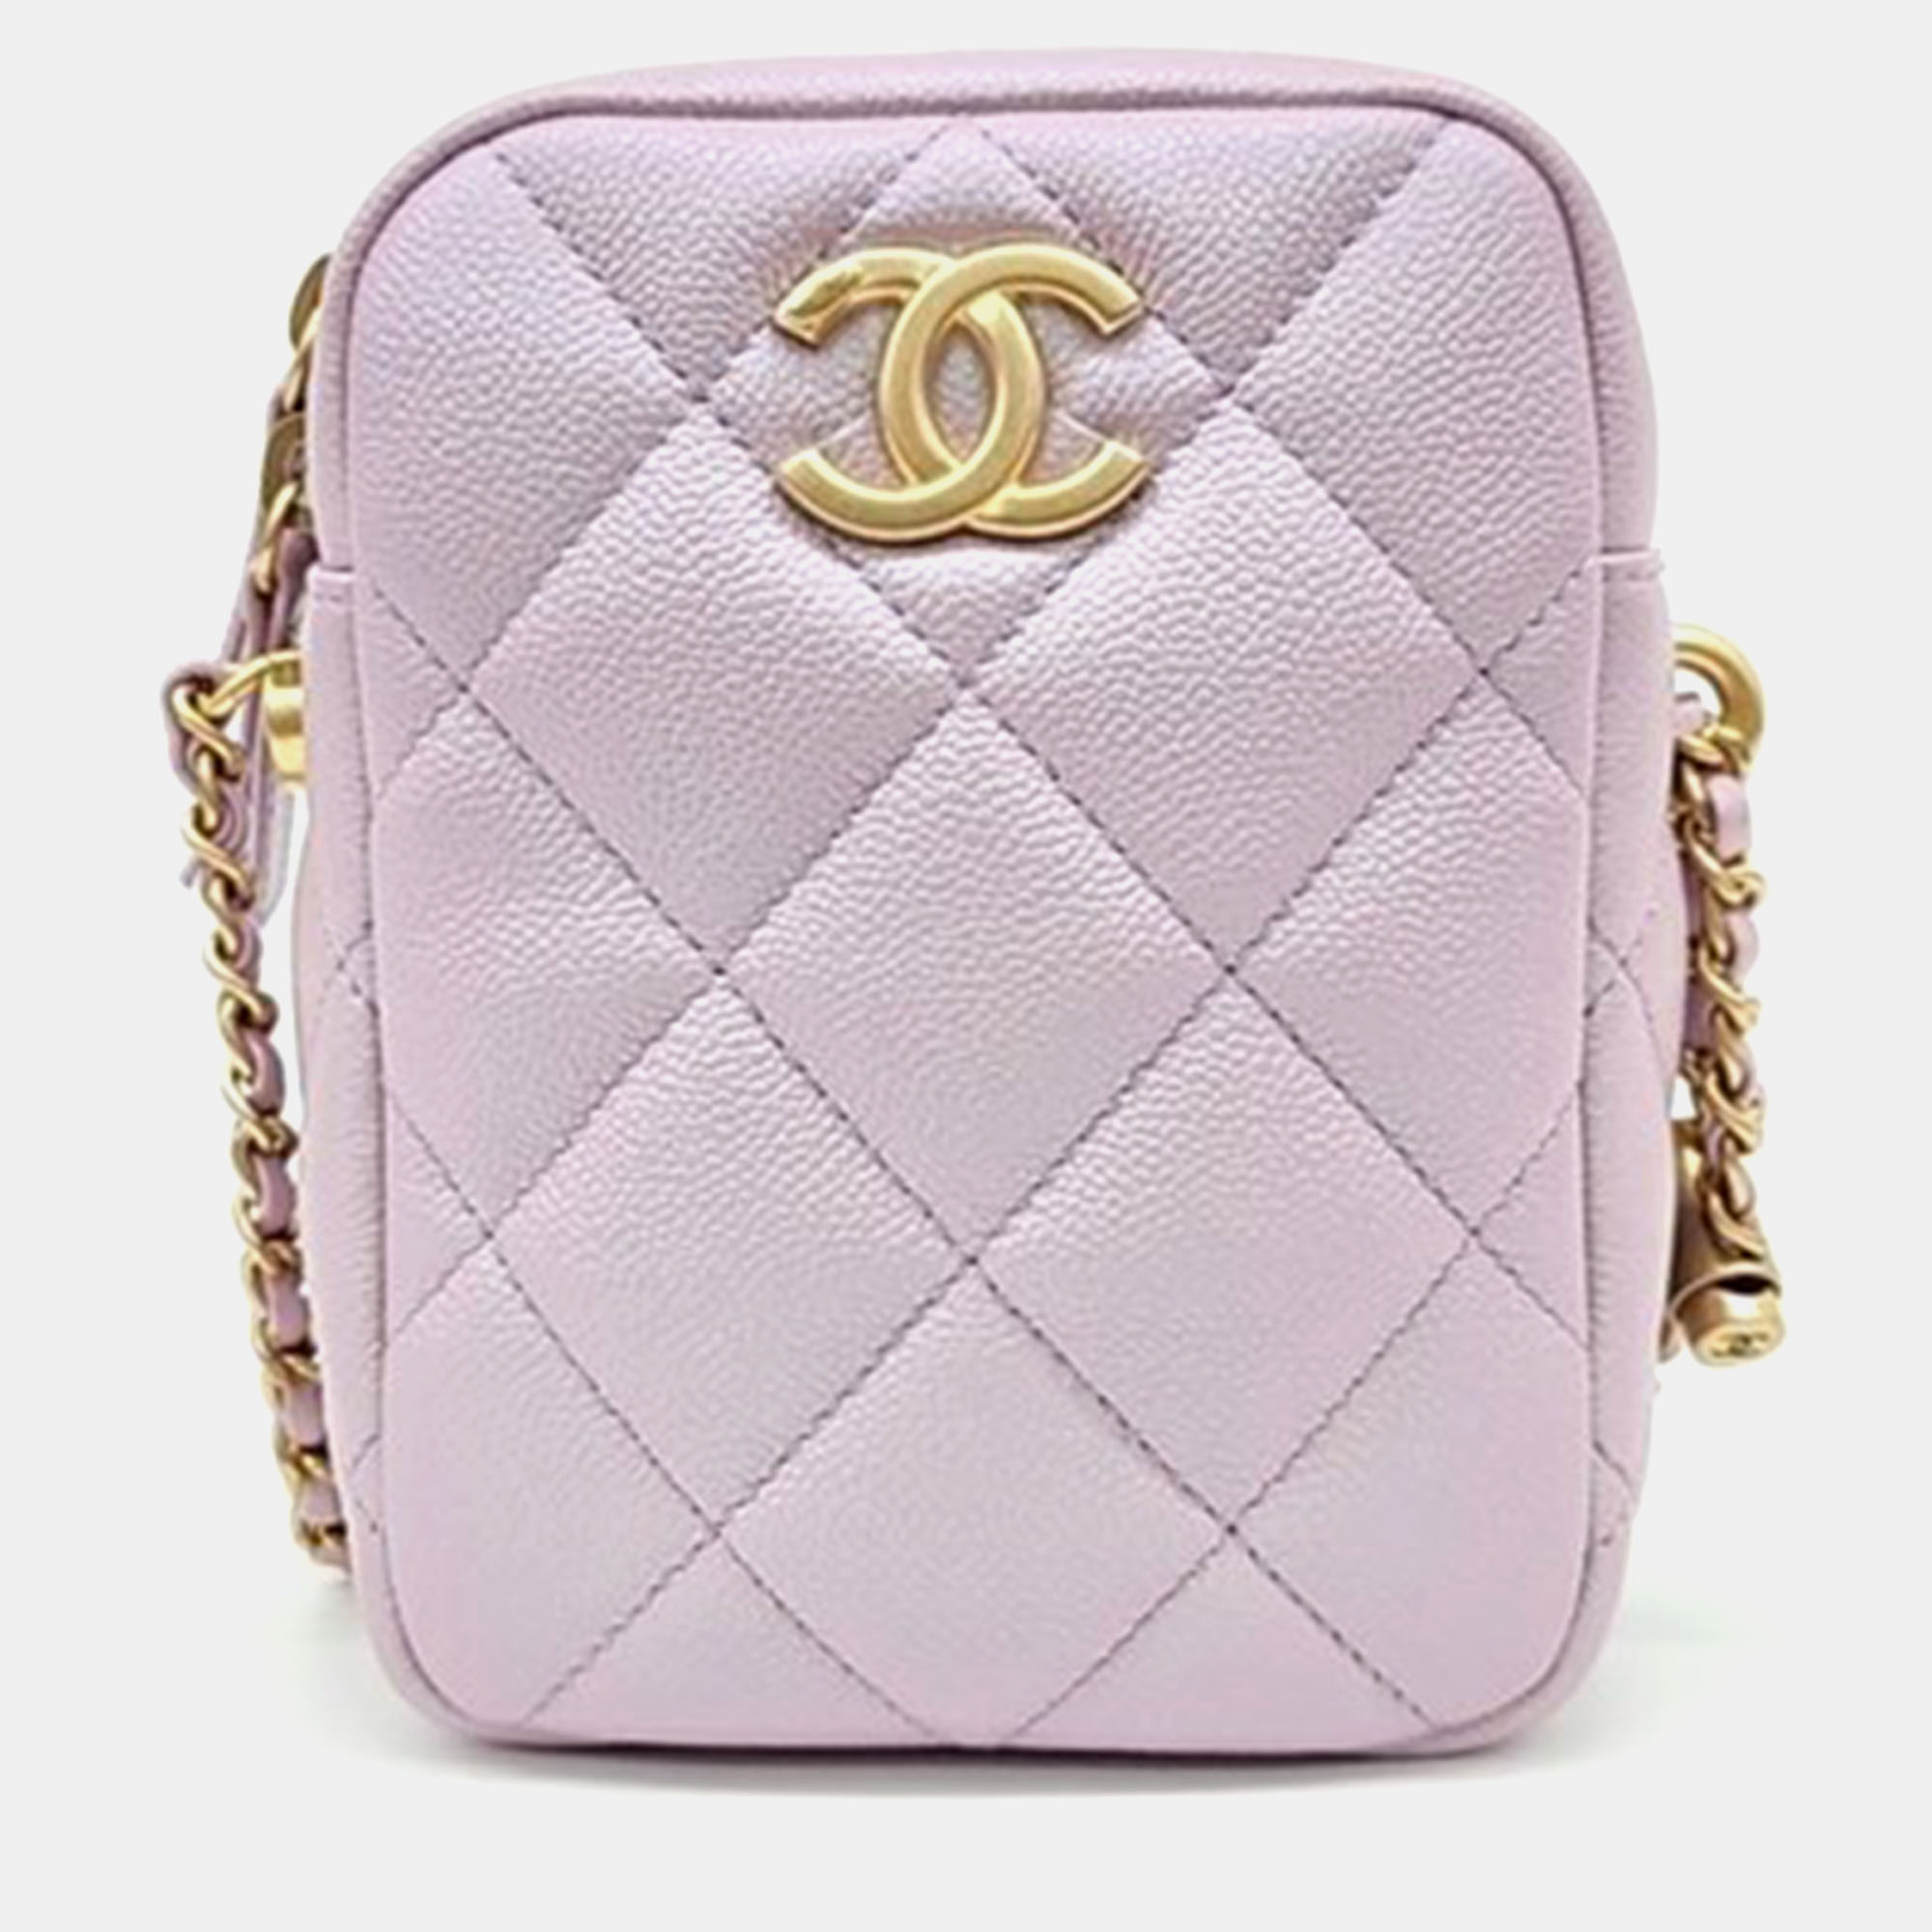 Chanel pink leather mini camera bag